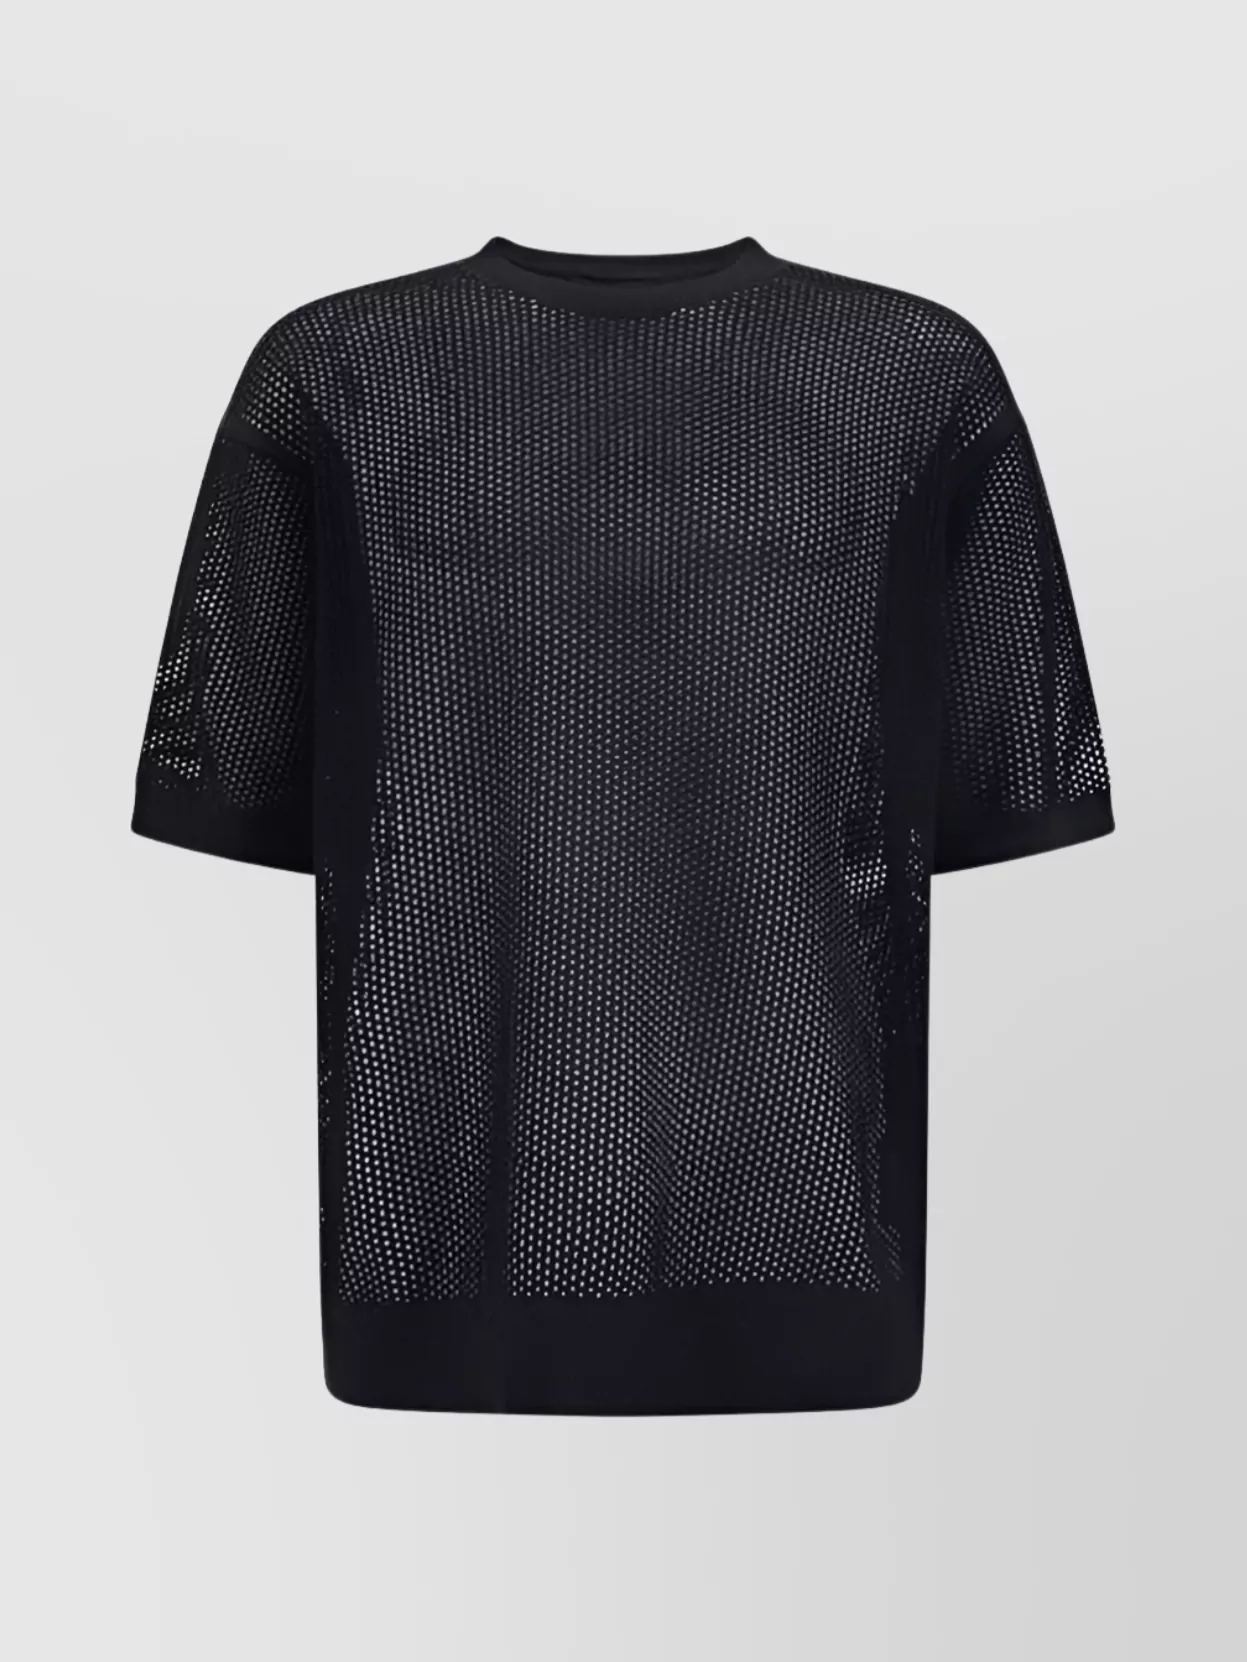 Prada Perforated Mesh Monochrome T-shirt In Black